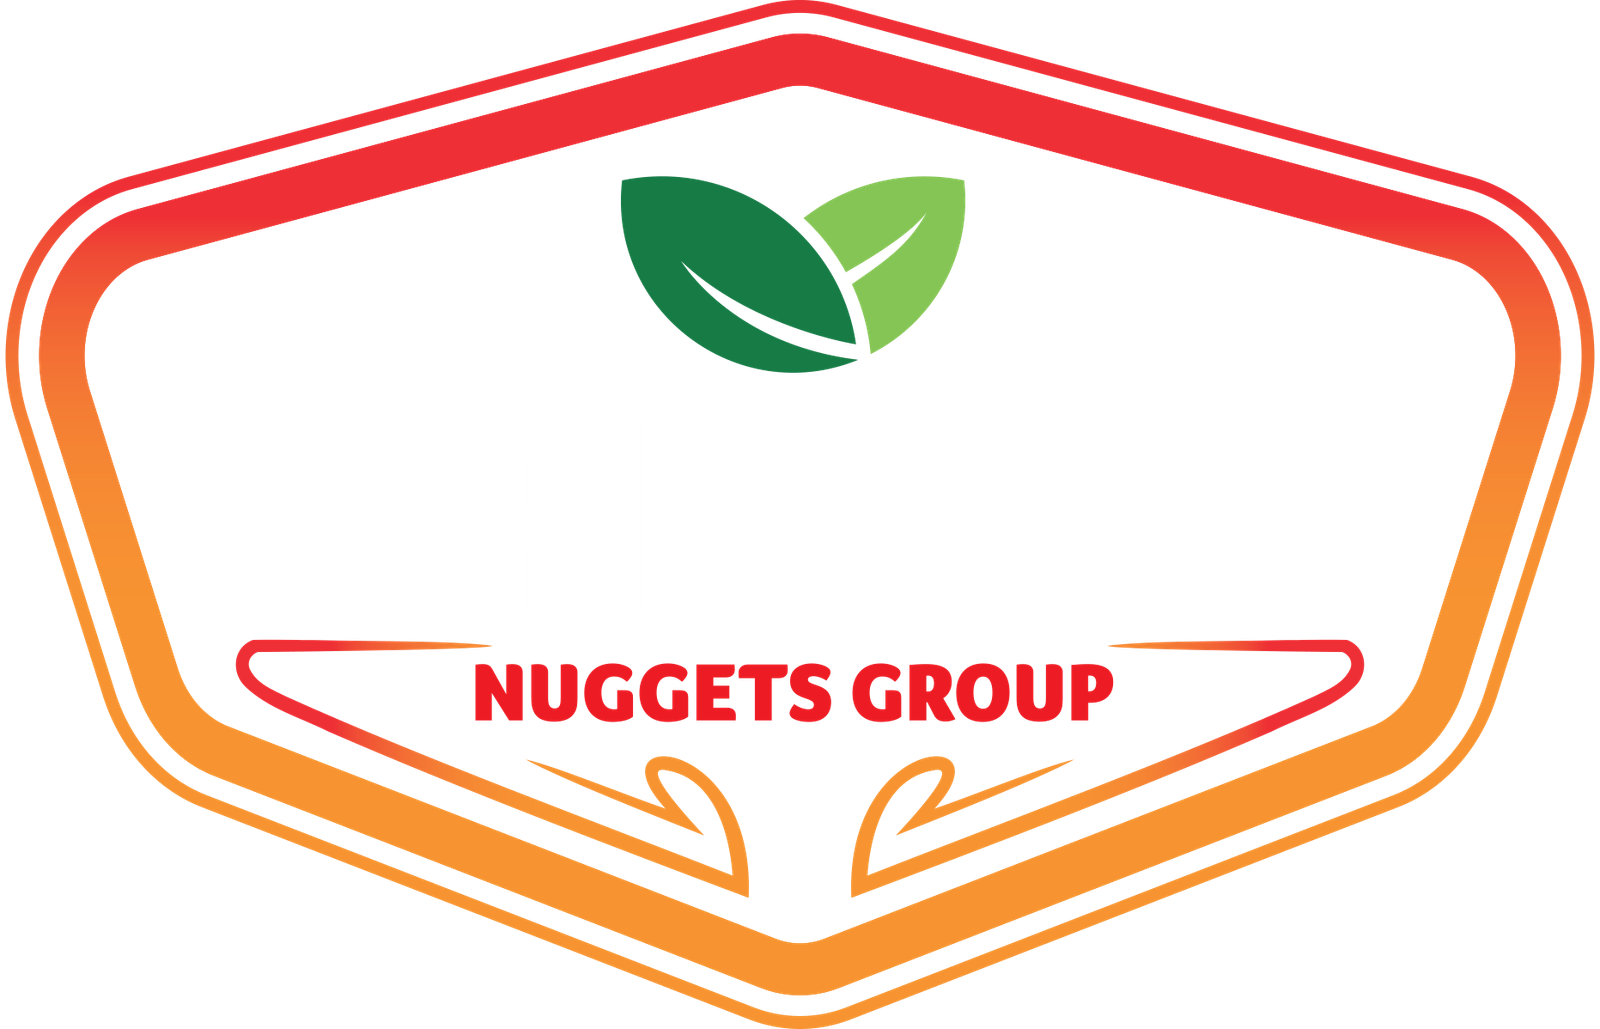 Areena nuggets group